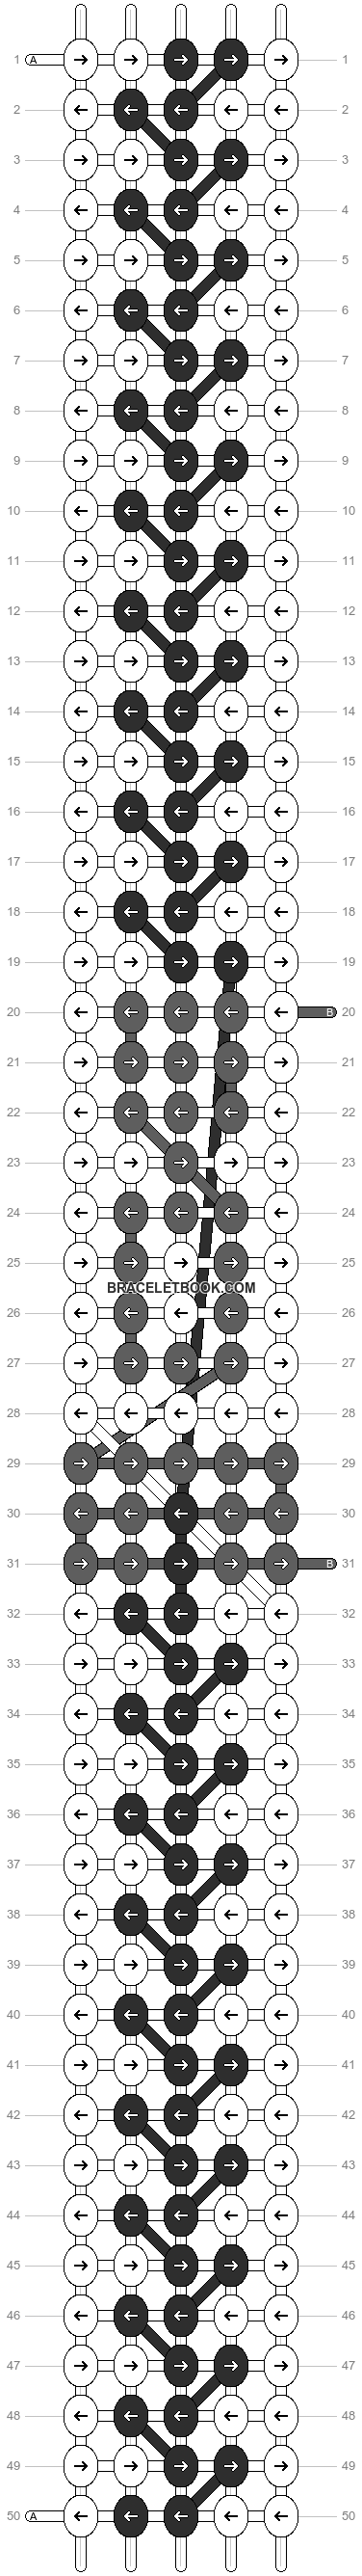 Alpha pattern #4902 pattern